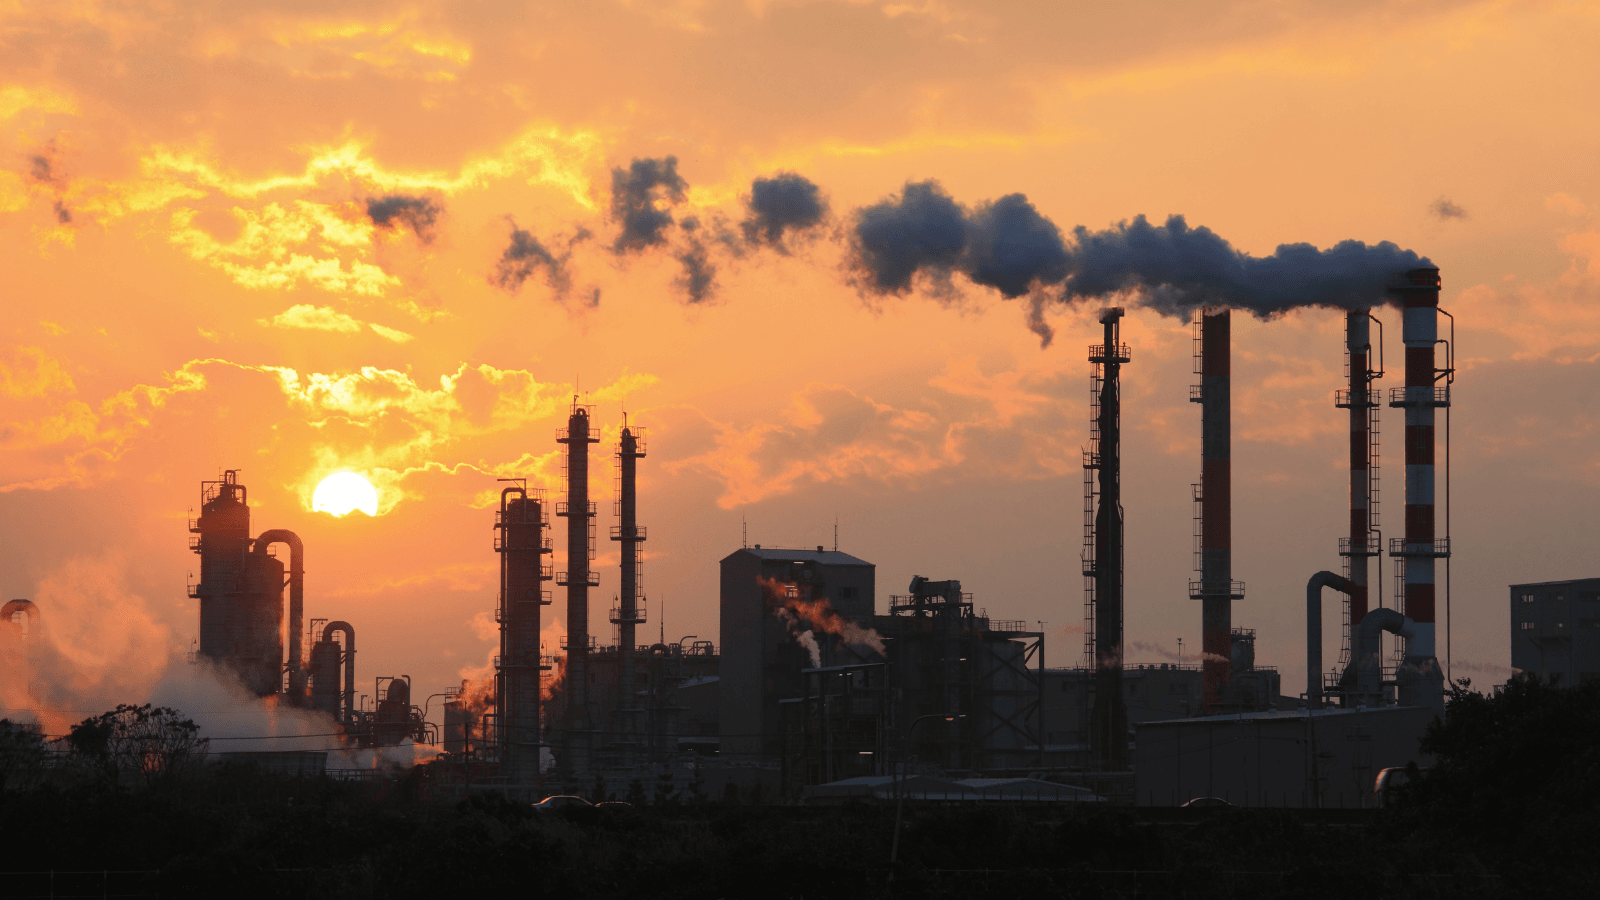 Power plant emitting smoke at sunset